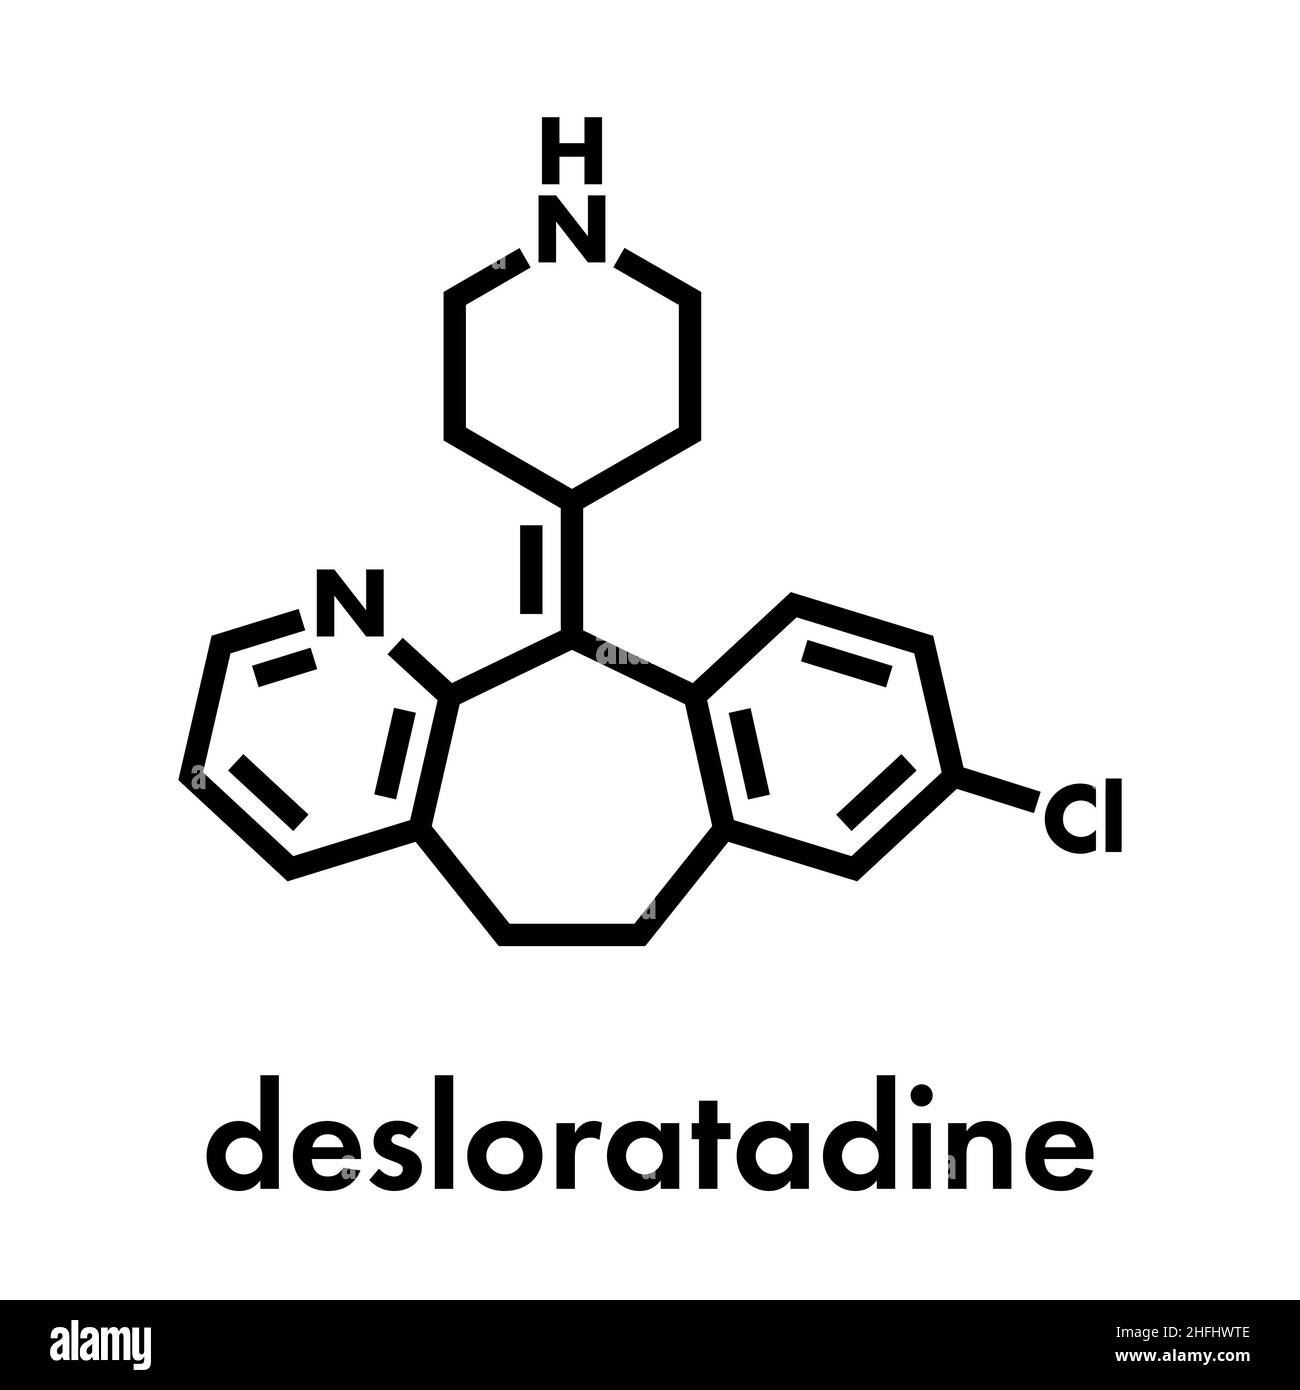 Desloratadine antihistamine drug molecule. Used to treat hay fever, urticaria and allergies. Skeletal formula. Stock Vector